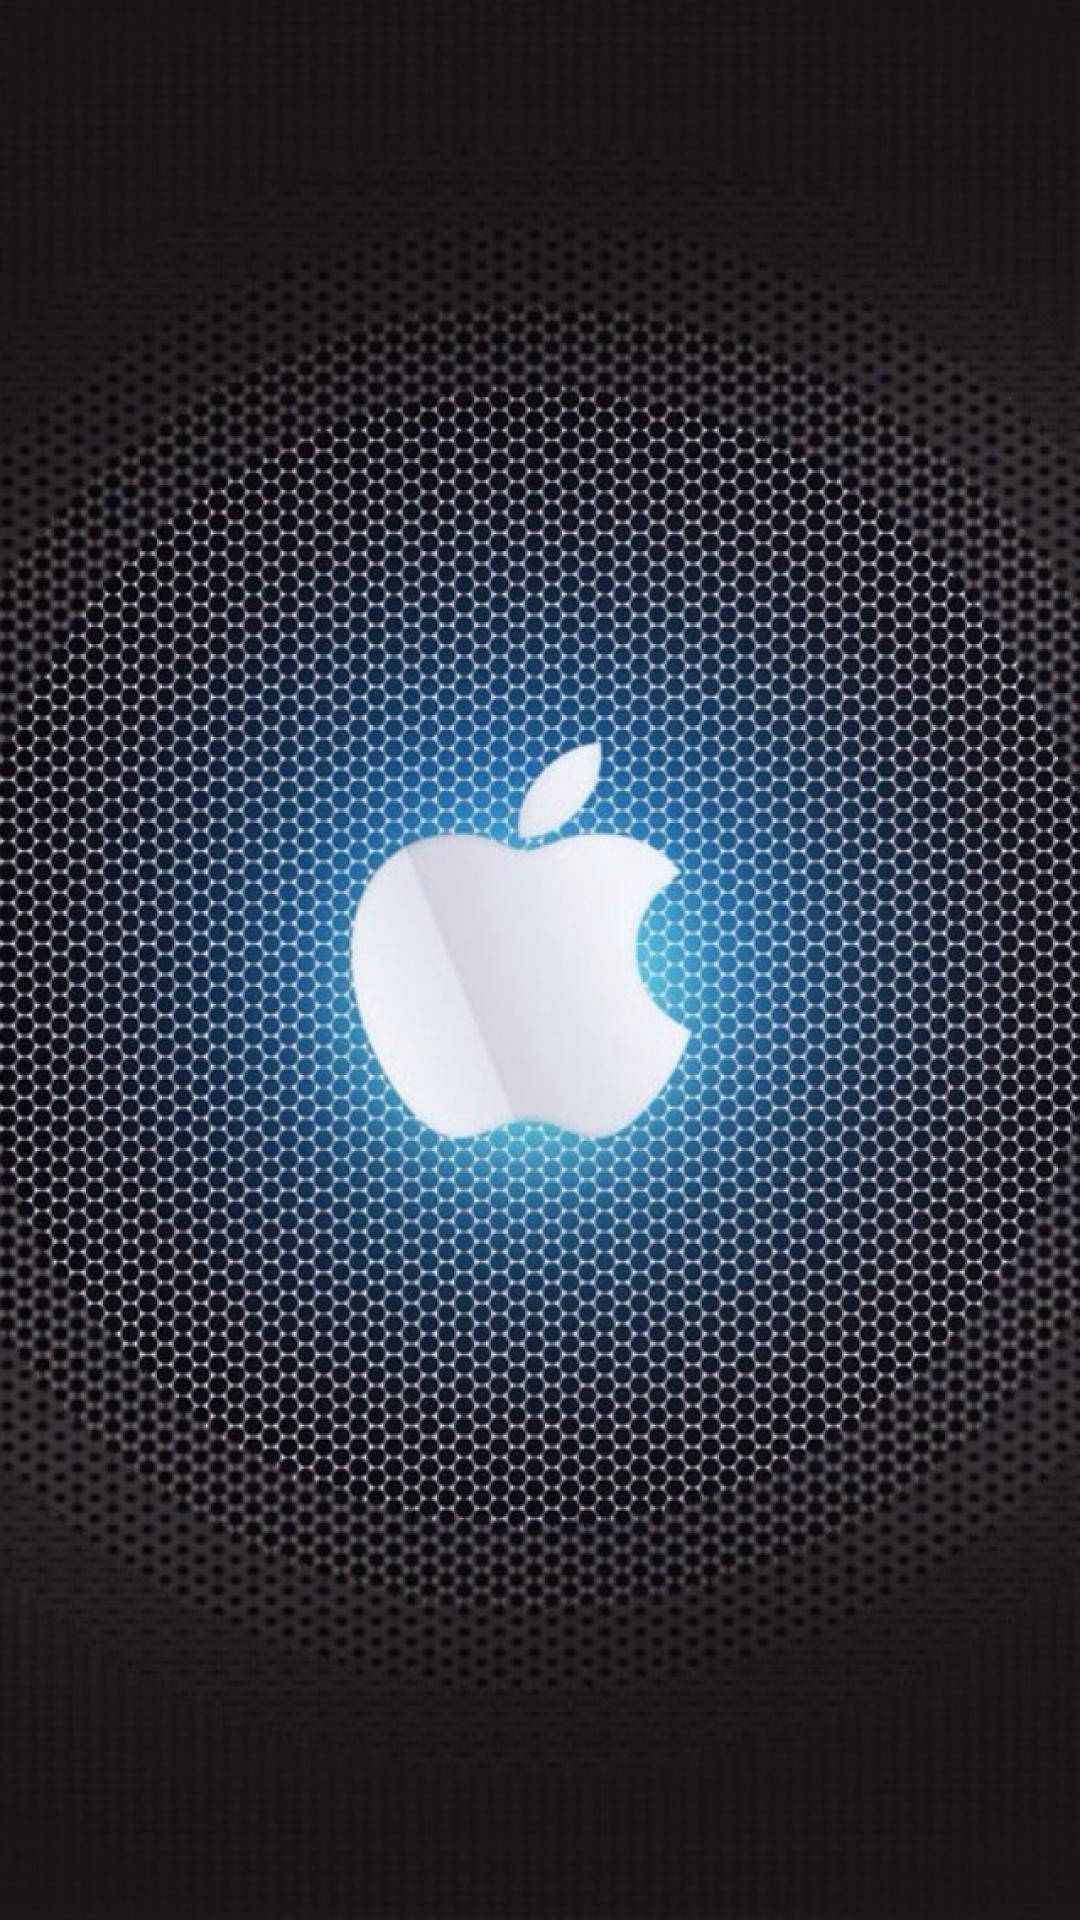 Apple Logo 4k In Digital Form